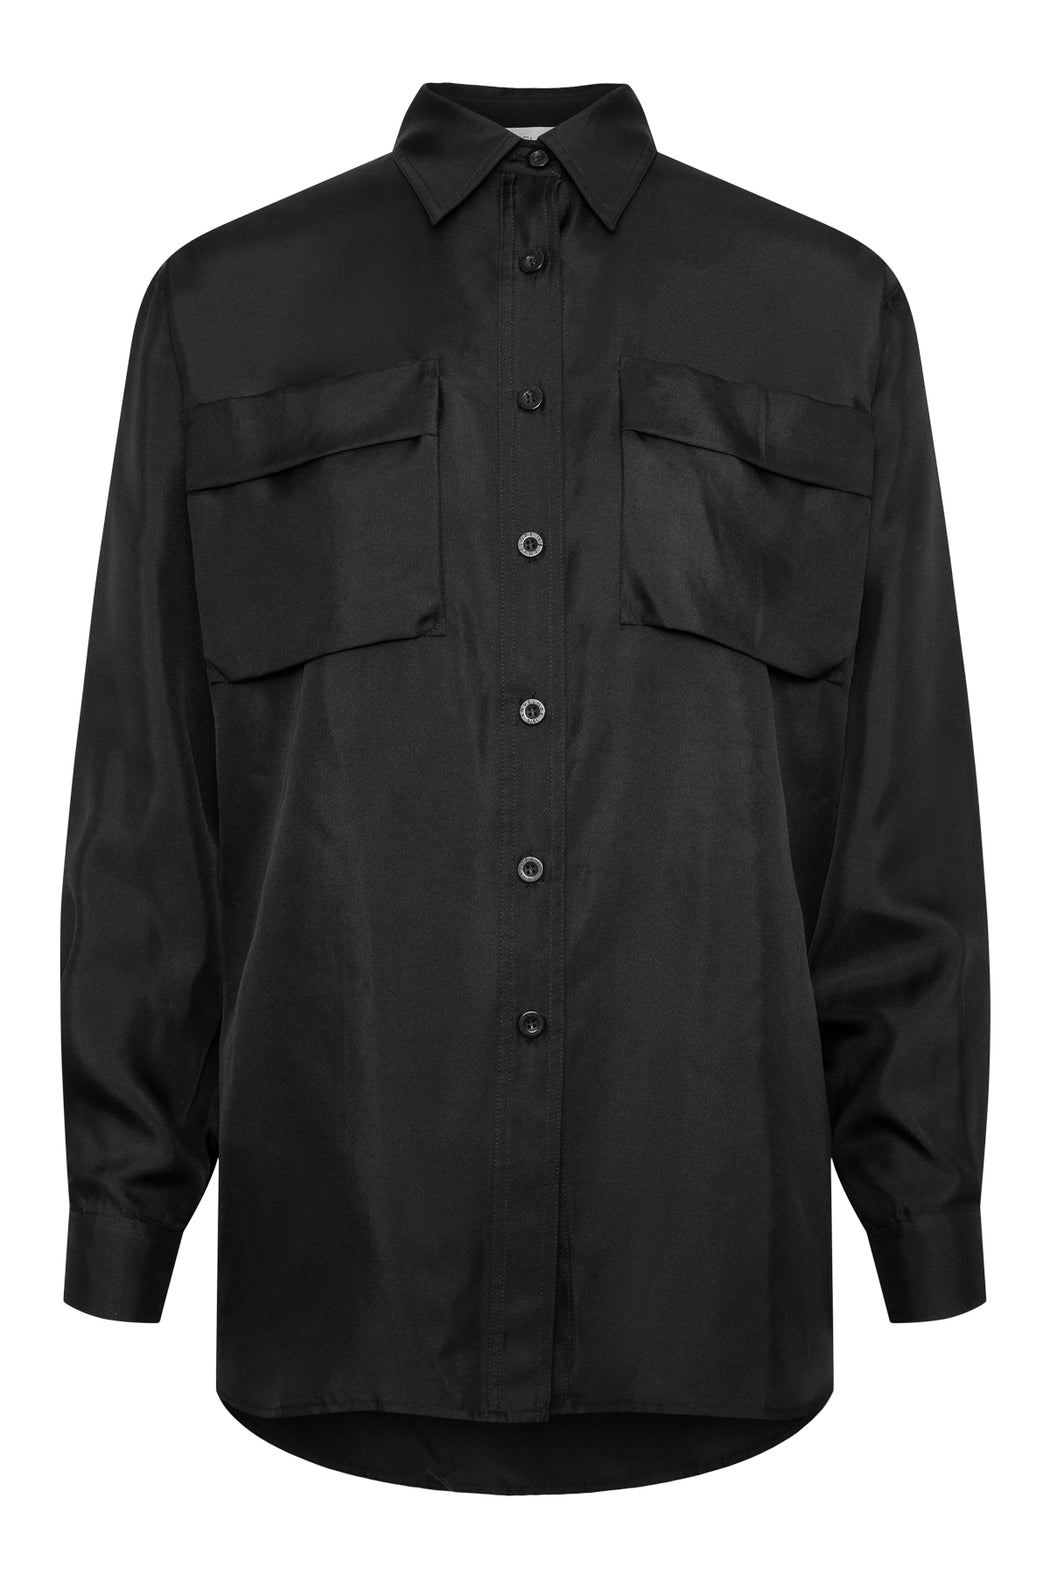 Envelope1976 Blank shirt - Silk Shirt Black